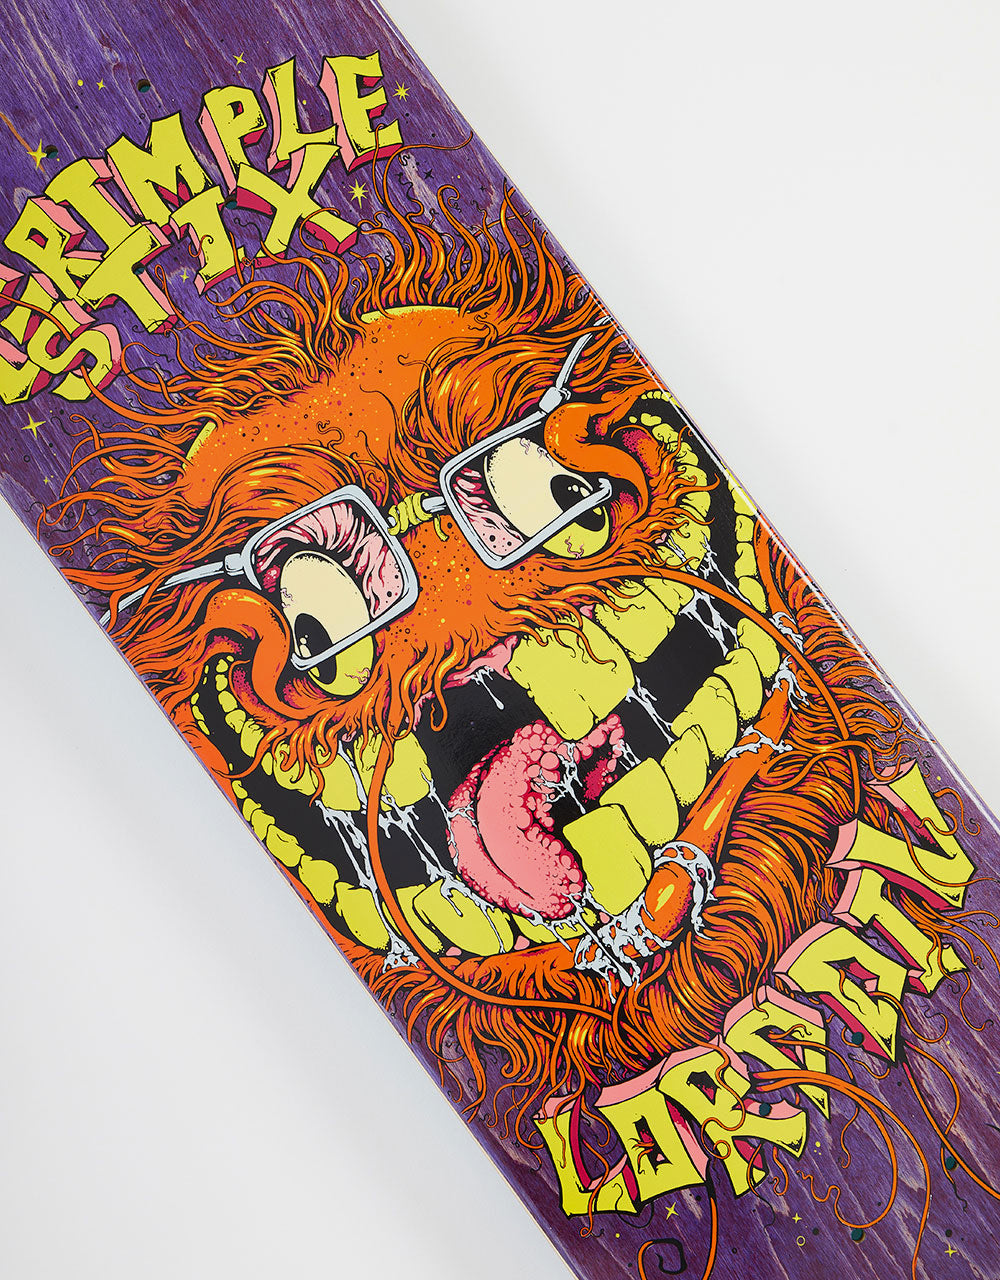 Anti Hero Lord Div Grimplestix Guest Skateboard Deck - 8.62"